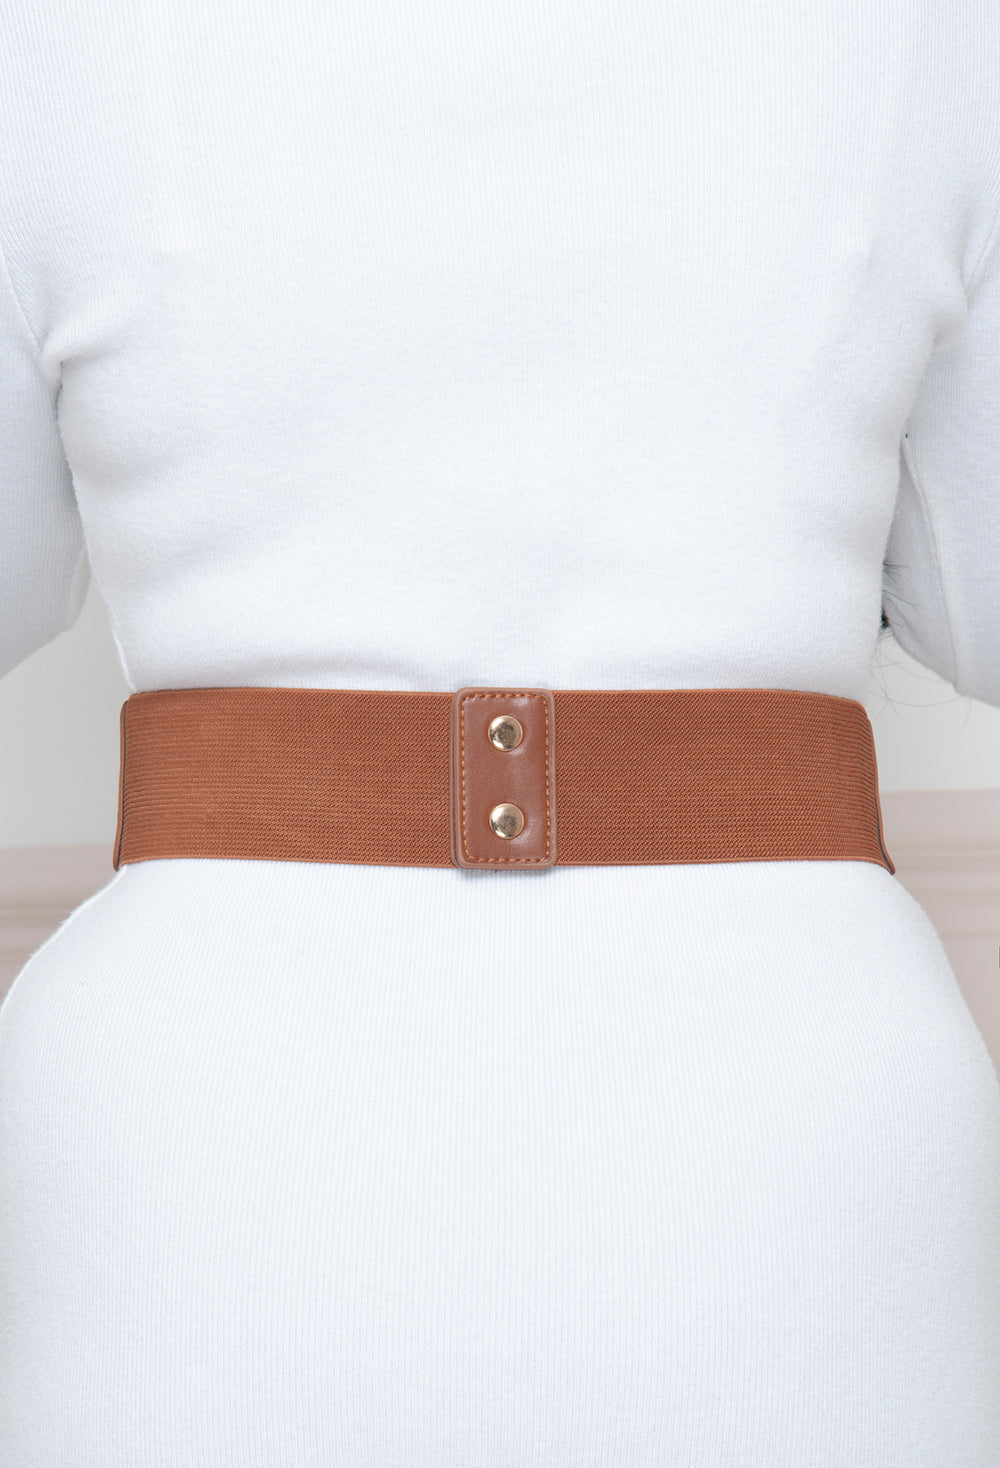 Lovely Brown Leather Belt Women, Wide Waist Belt, Leather Waist